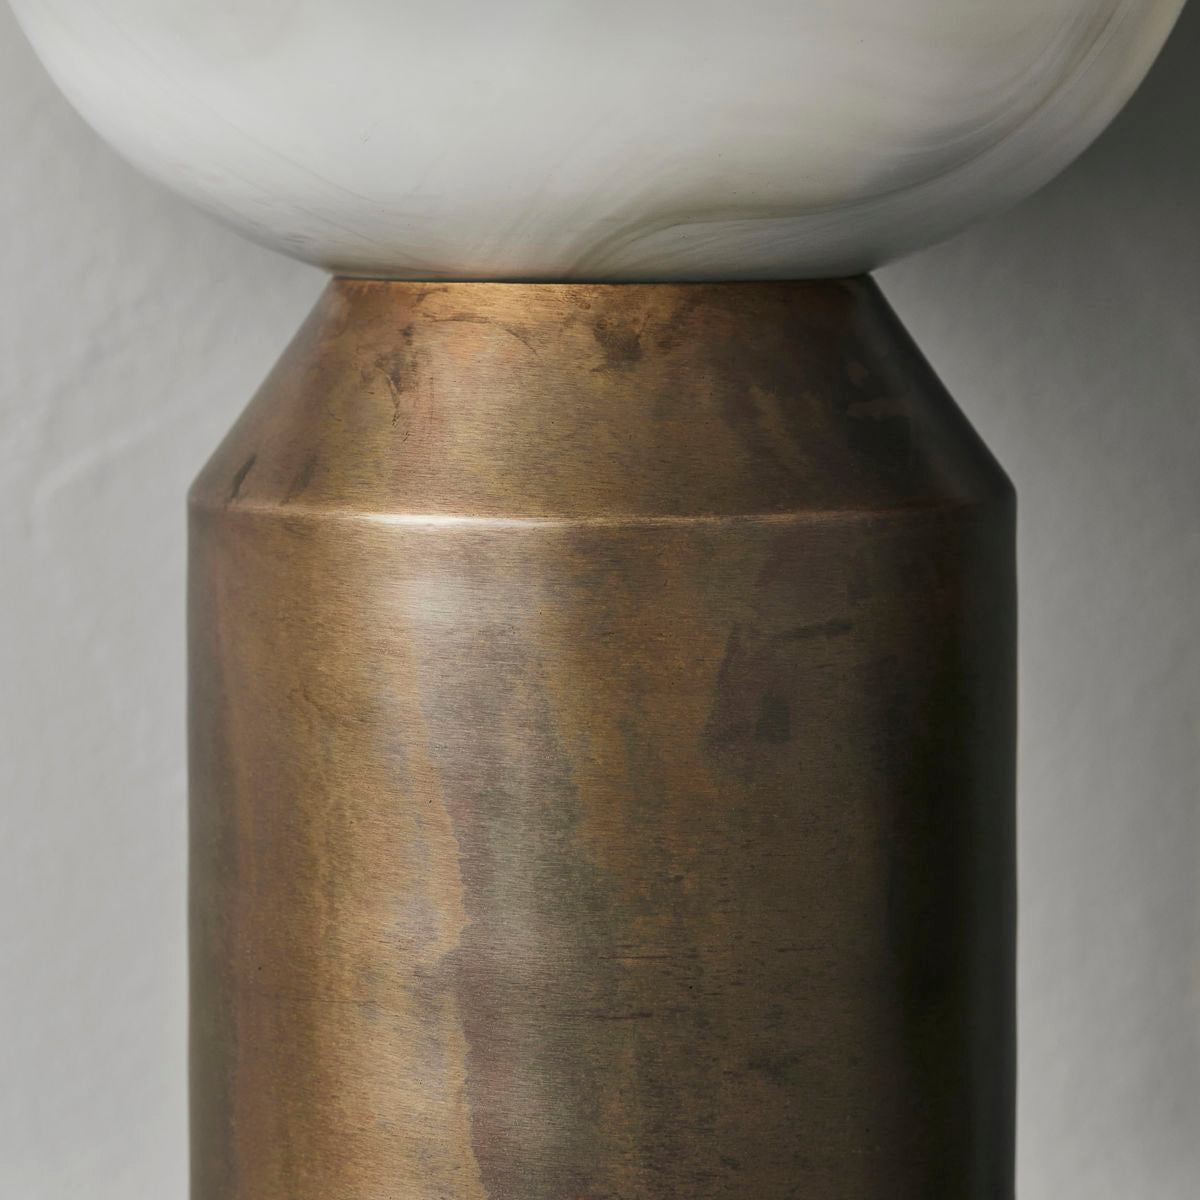 Table lamp, Big fellow, Antique brass finish Café Society